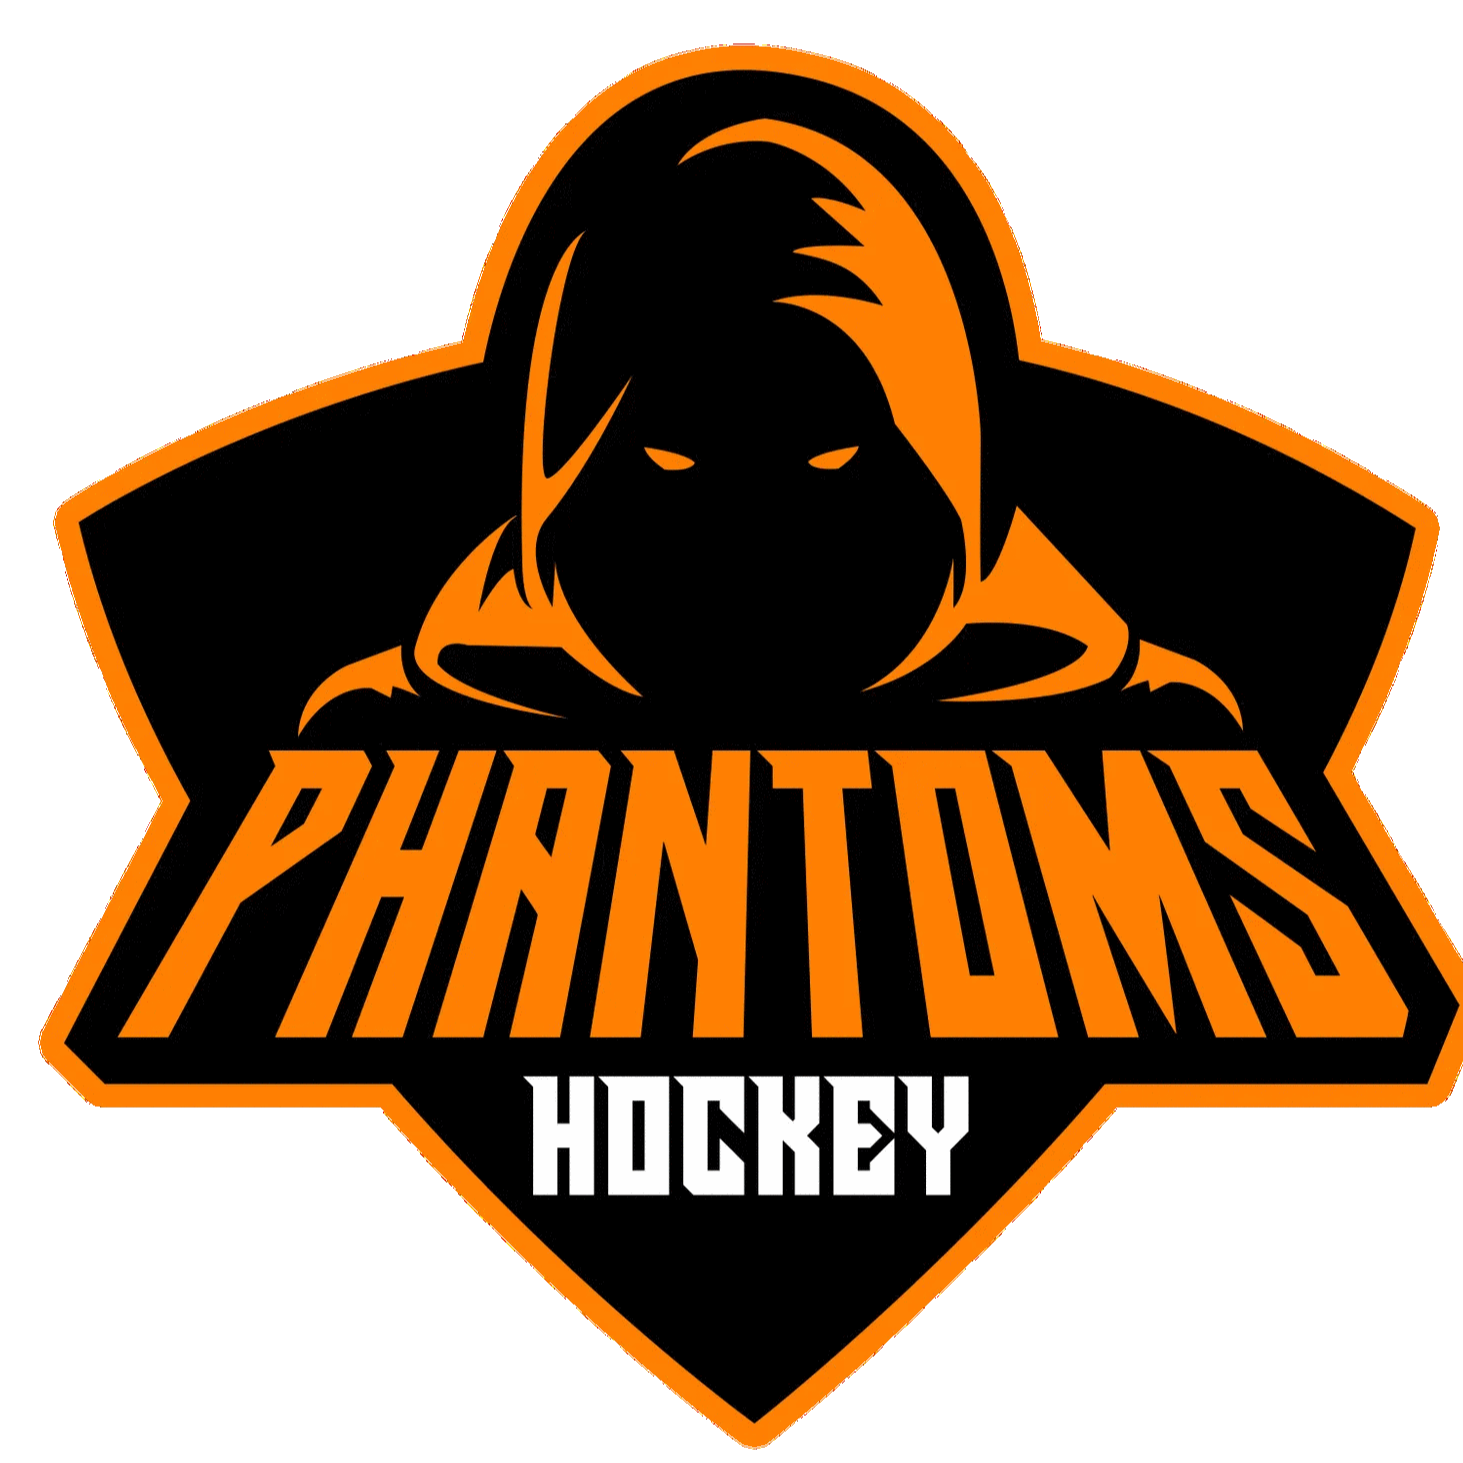 Phantoms Hockey